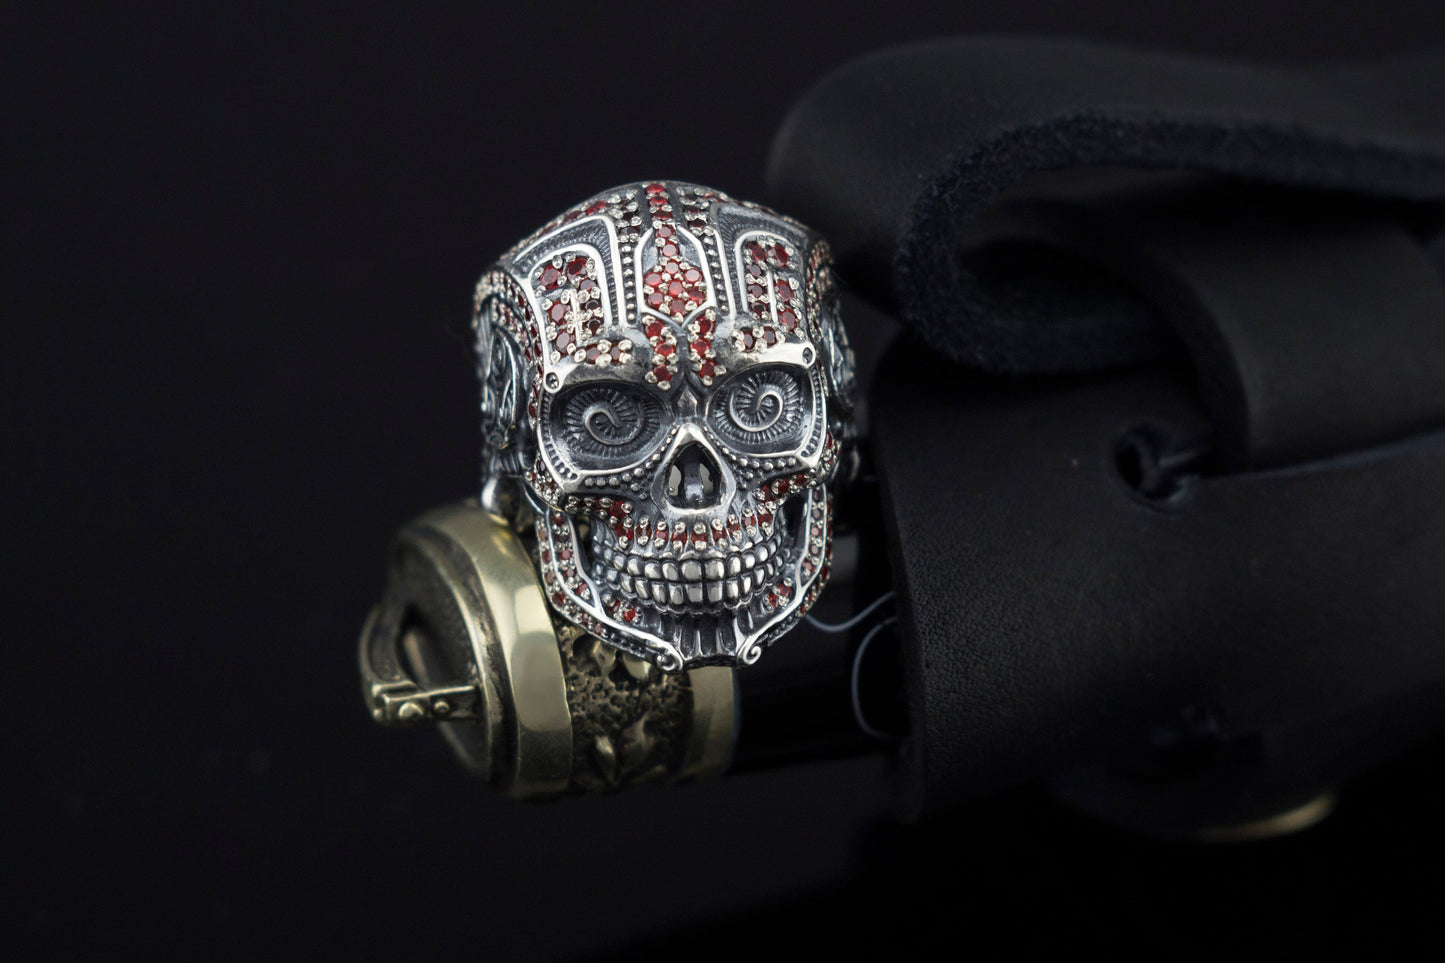 Skull ring Biker ring Mexican Biomechanical skull ring Skull jewelry Silver sterling ring 925 Mens jewelry Gothic ring Mexican skull